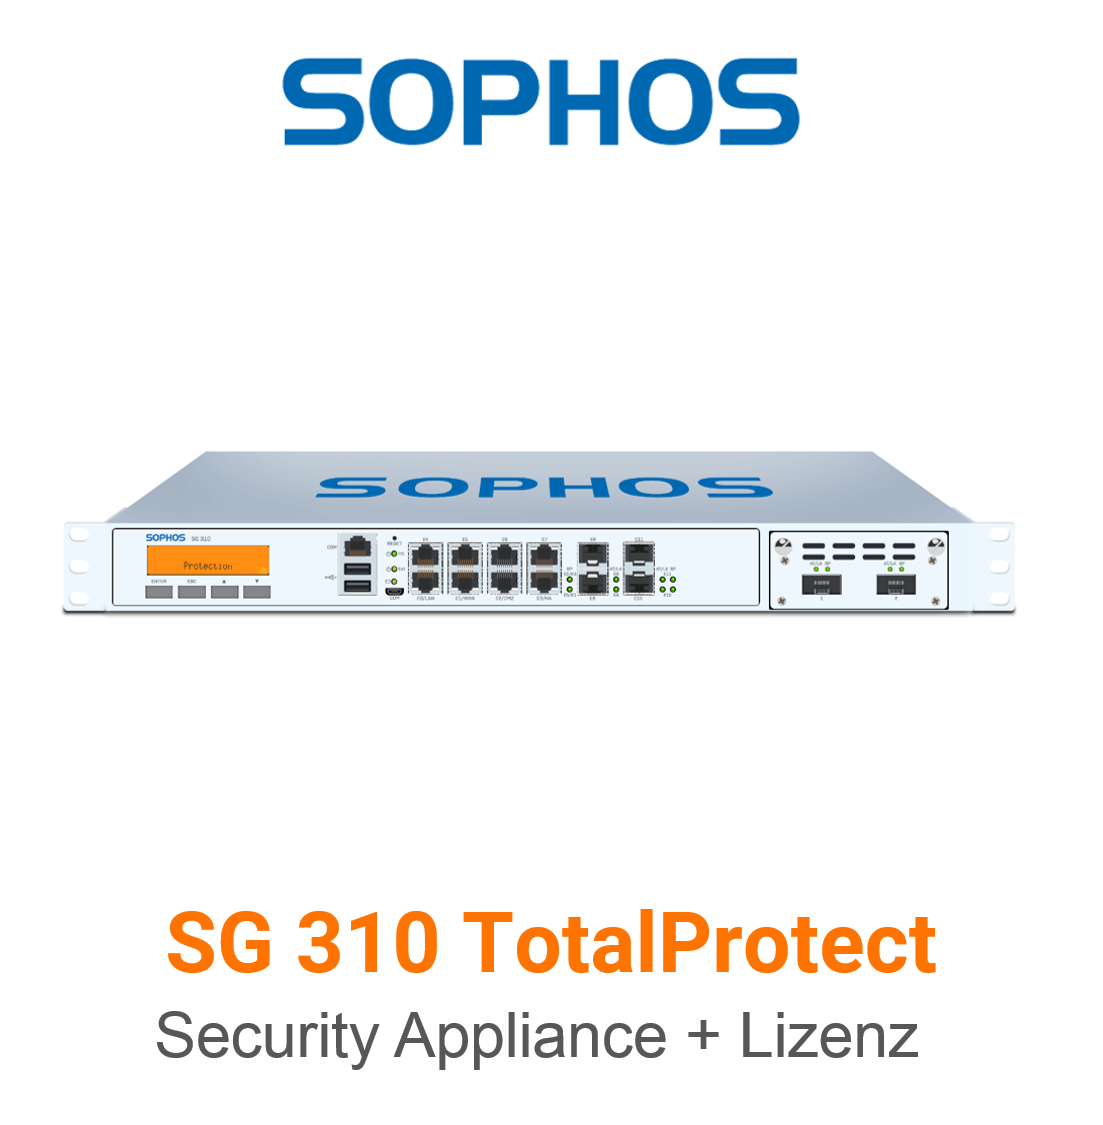 Sophos SG 310 TotalProtect Bundle (Hardware + Lizenz)